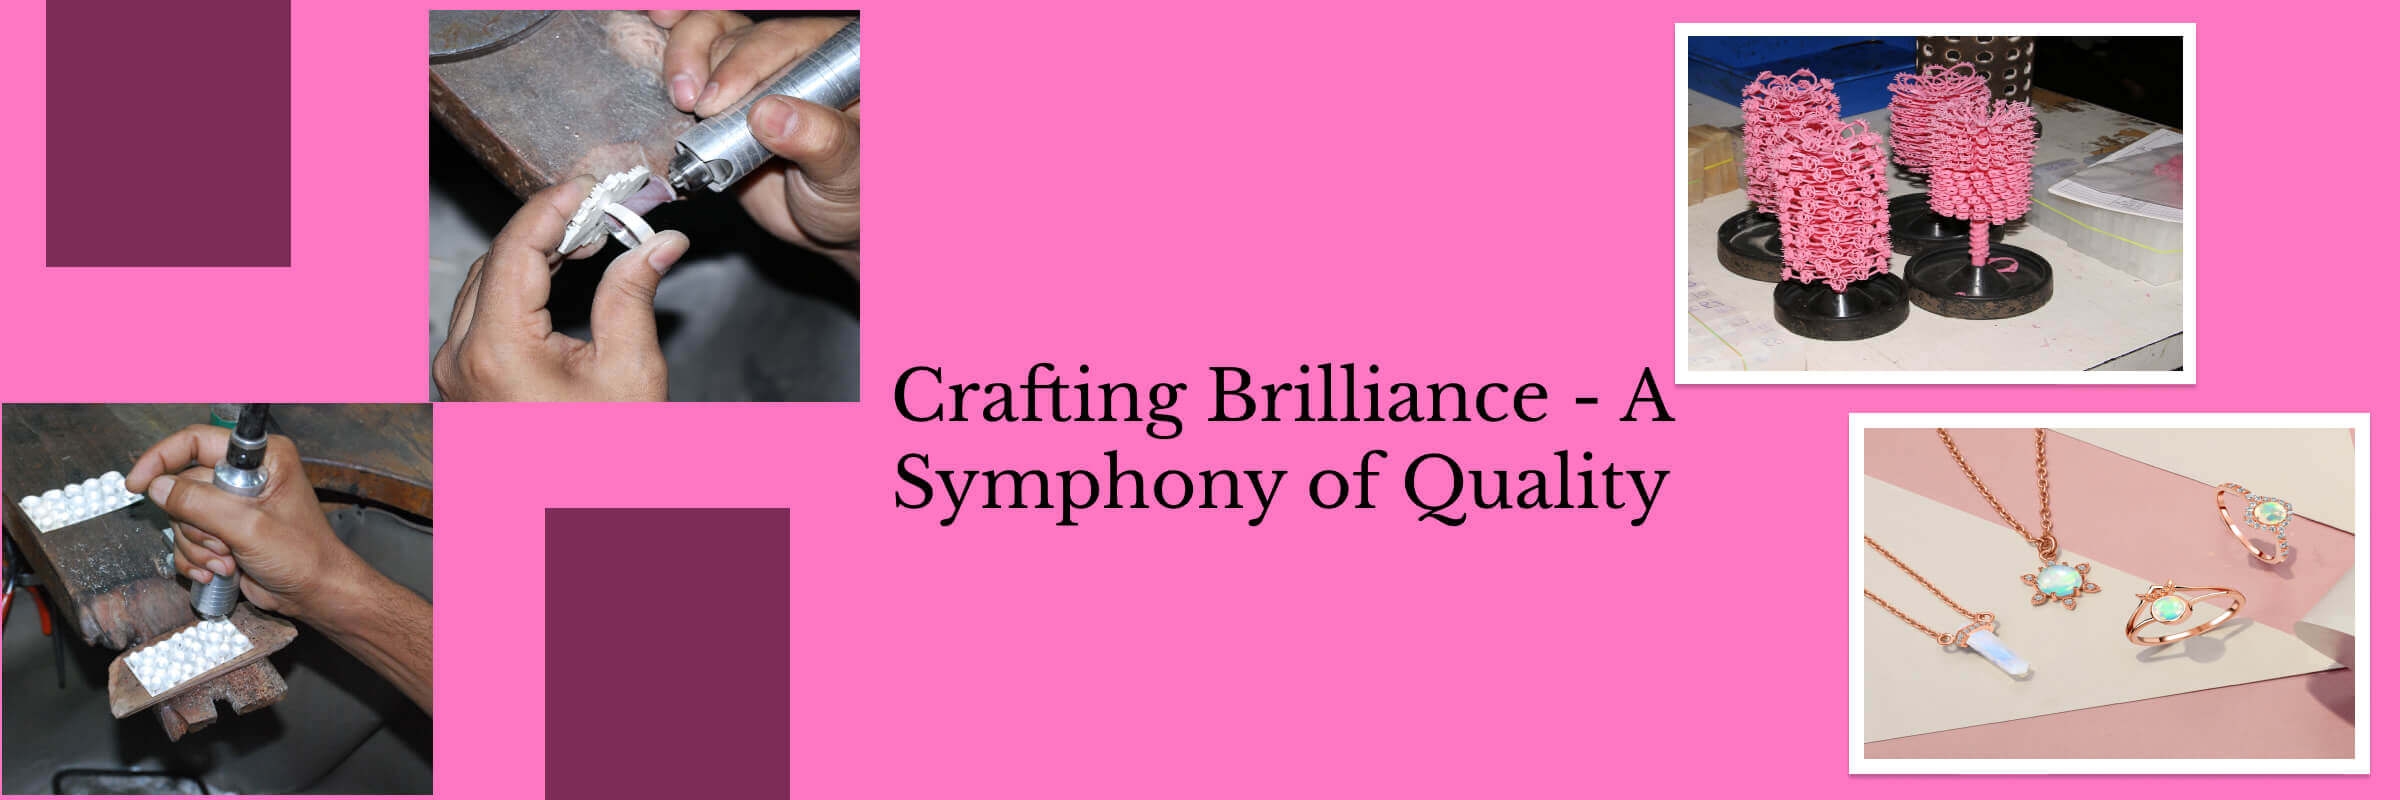 Craftsmanship and Quality